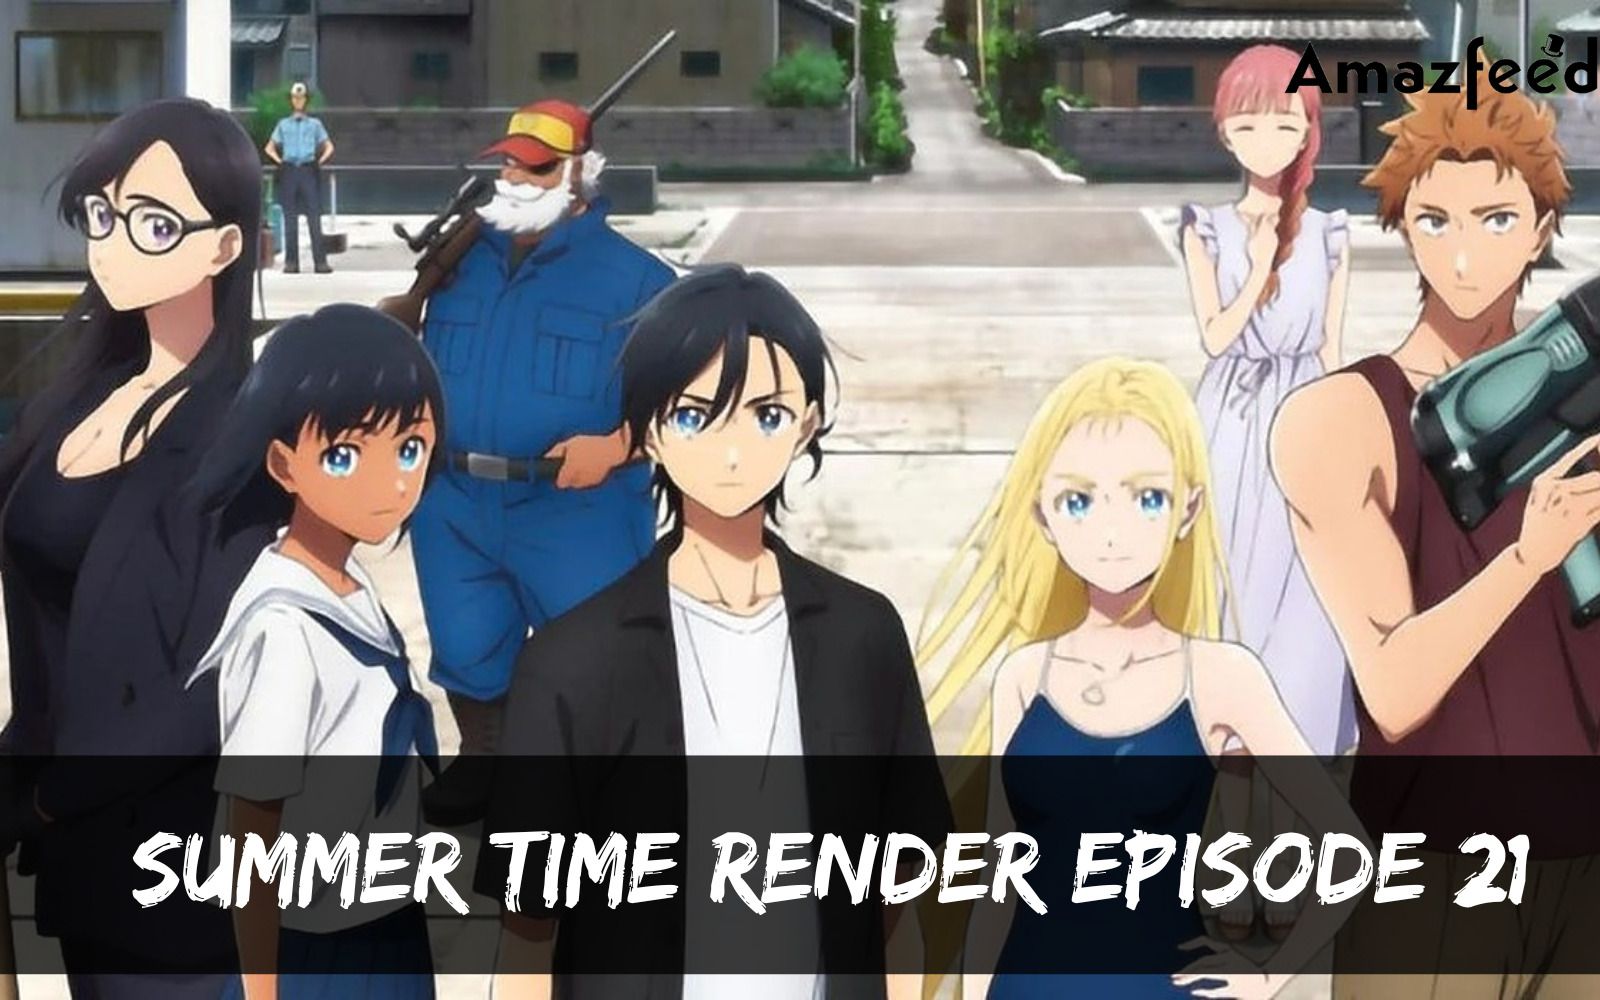 Suspense Anime Summer Time Rendering Casts Natsuki Hanae, Anna